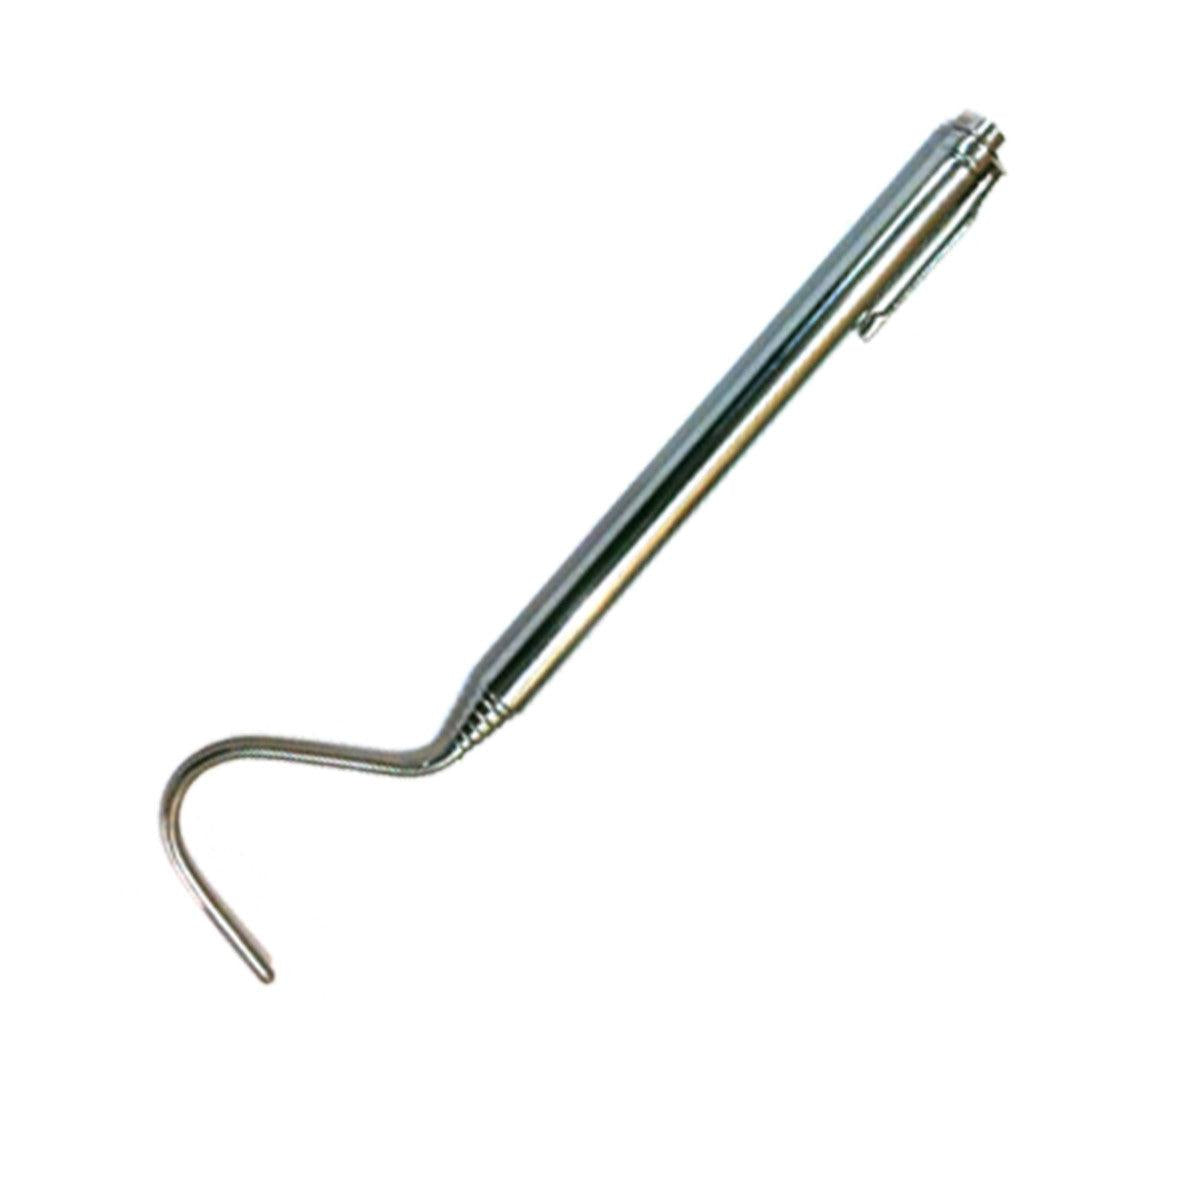 HabiStat Snake Hook, Collapsible, 95-36cm